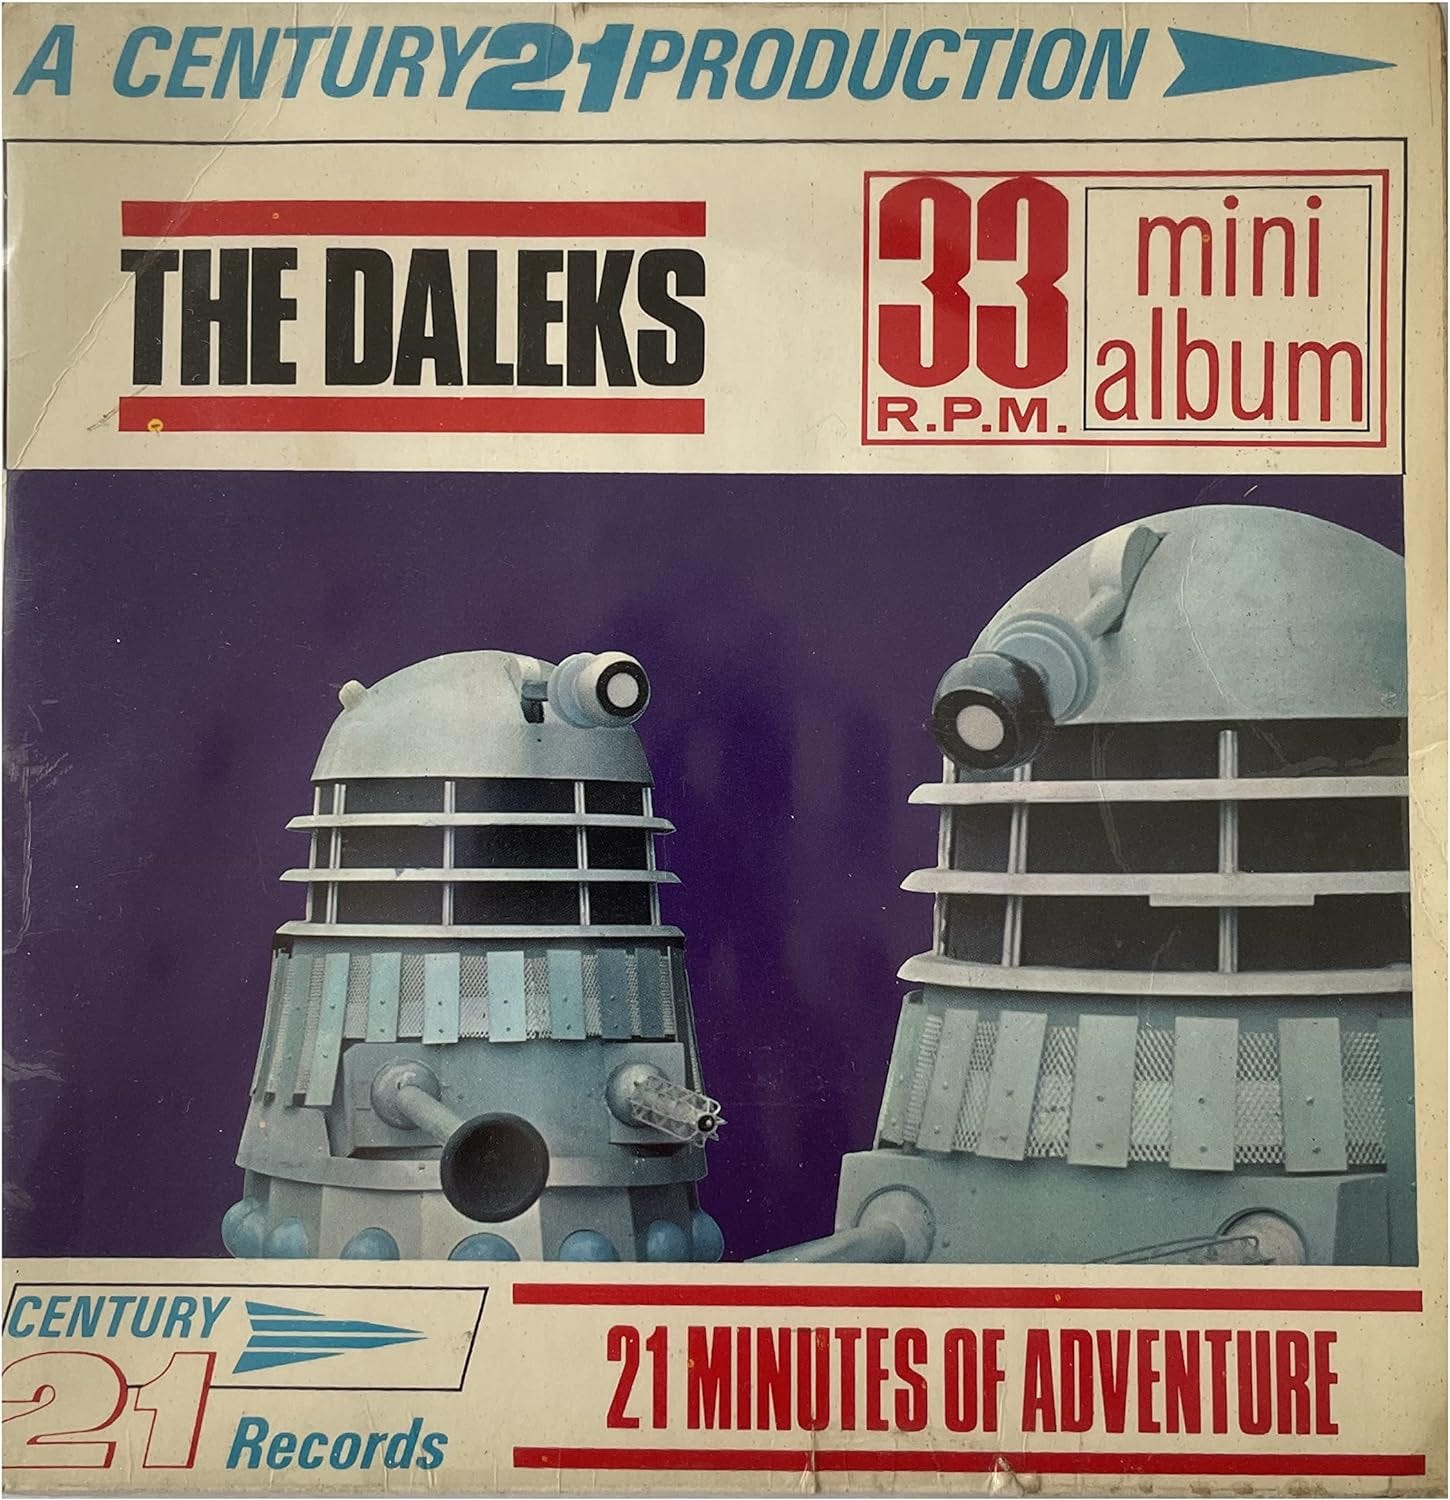 The cover of The Daleks 'mini album'